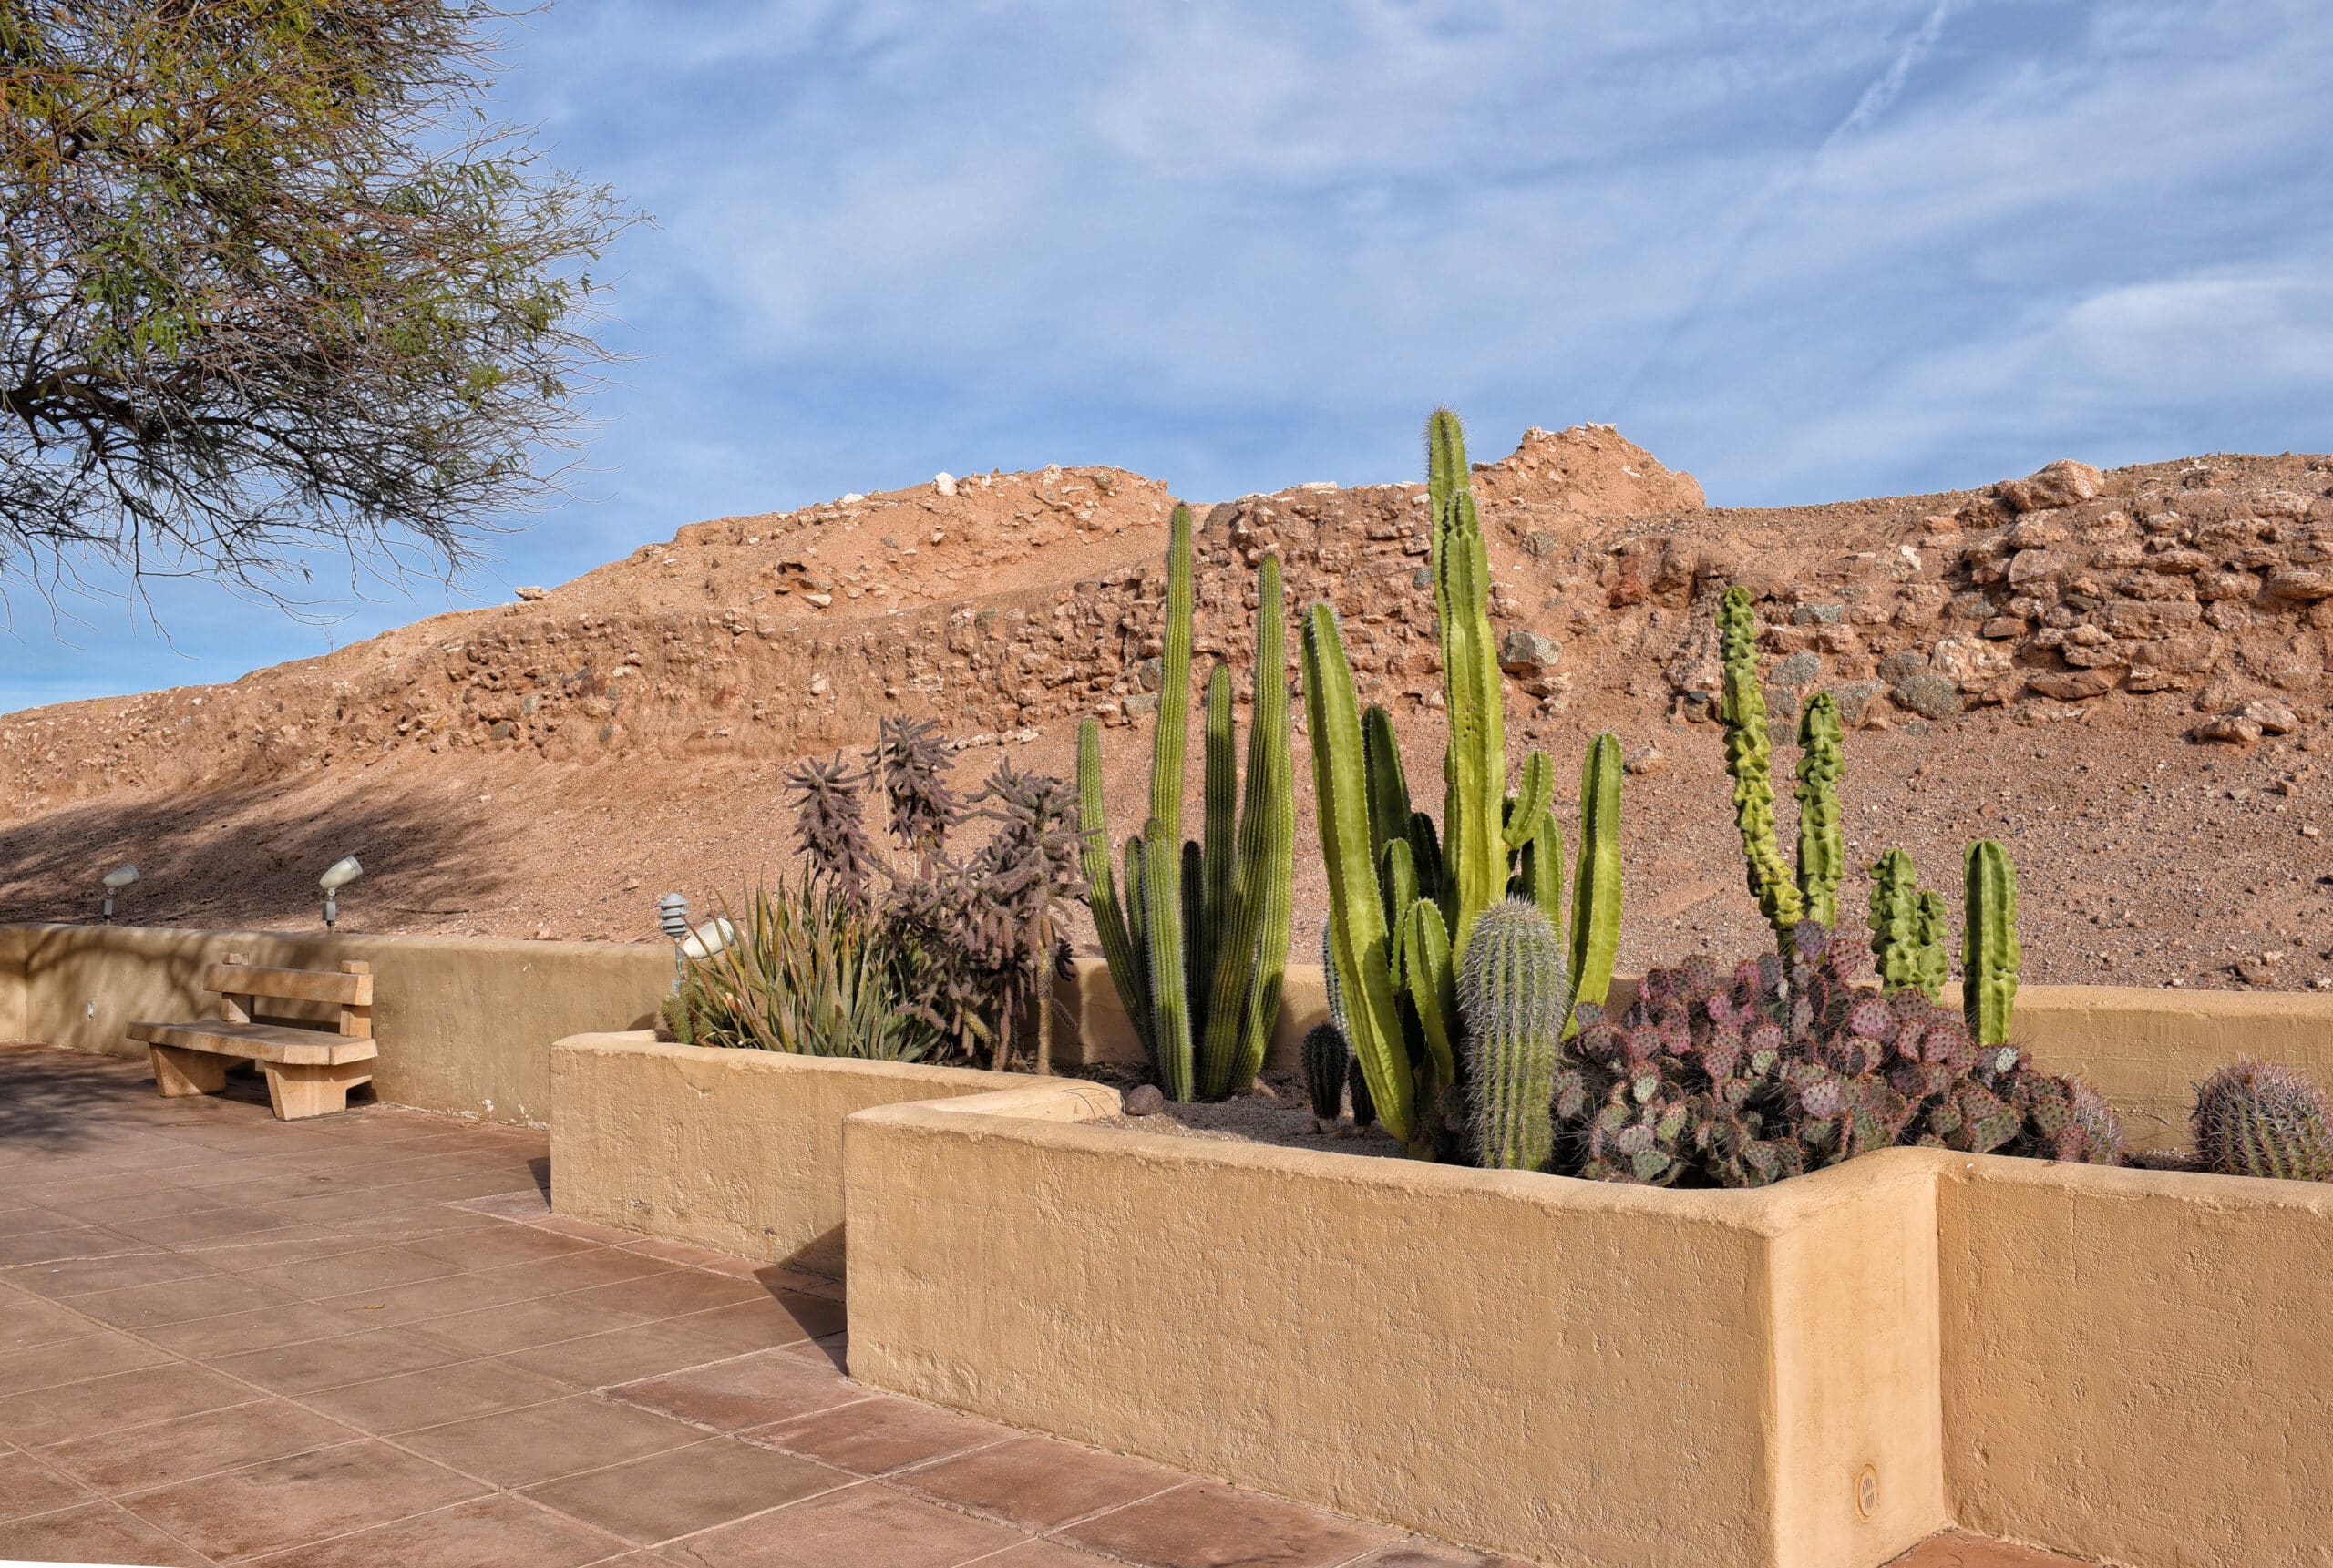 A xeriscape cactus garden, a style of landscape design requiring